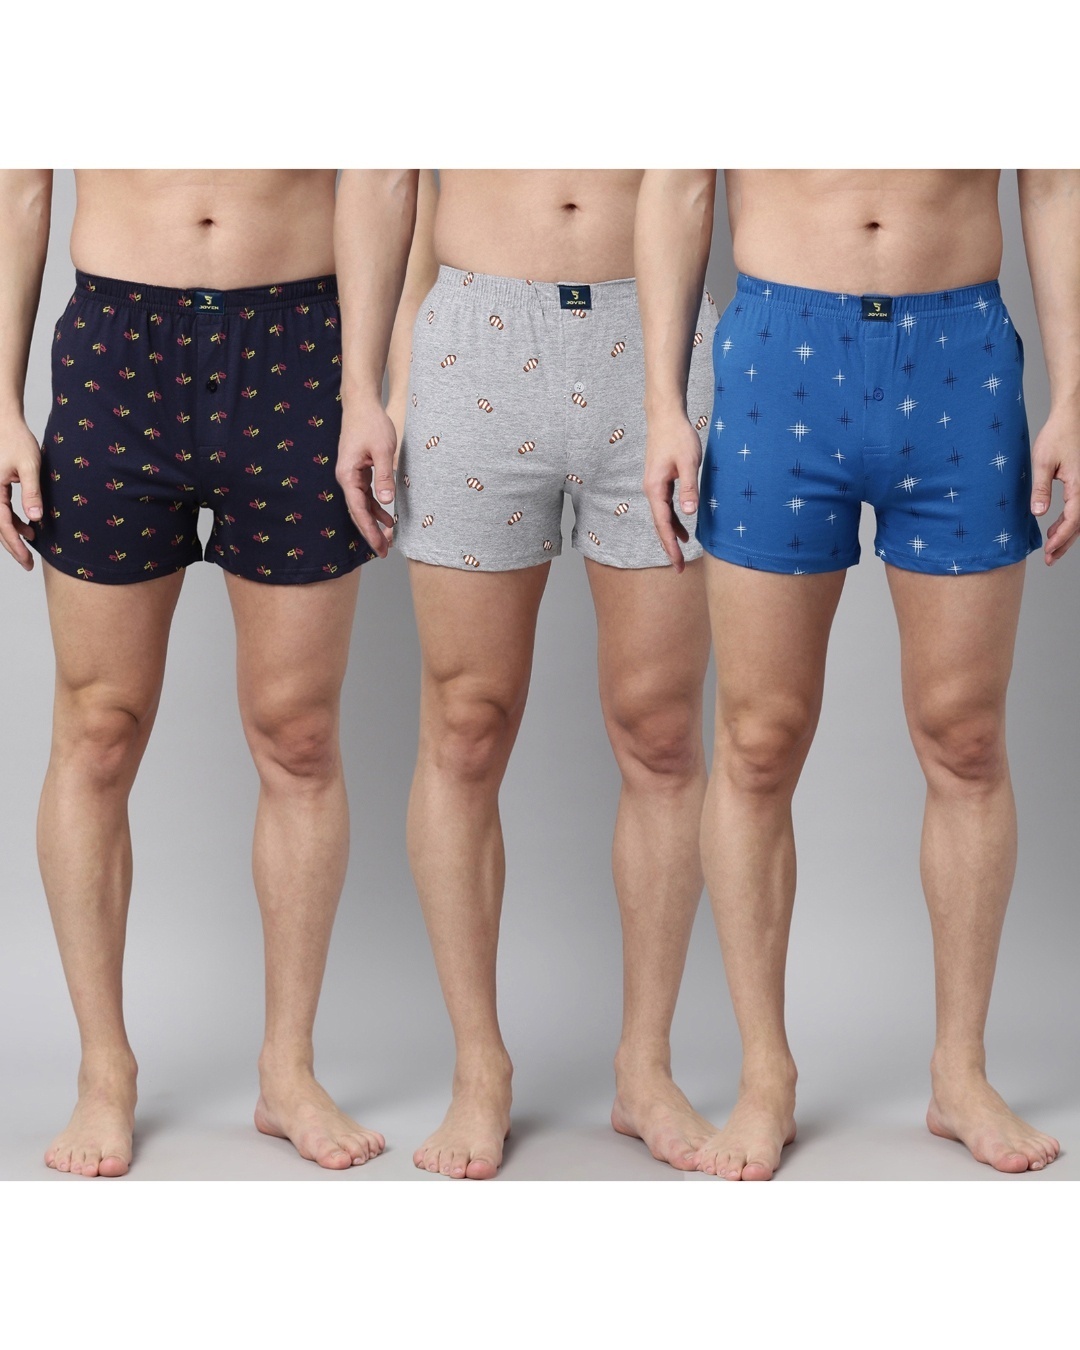 Shop Men's Multicolor Printed Regular Fit Boxer (Pack of 3)-Front